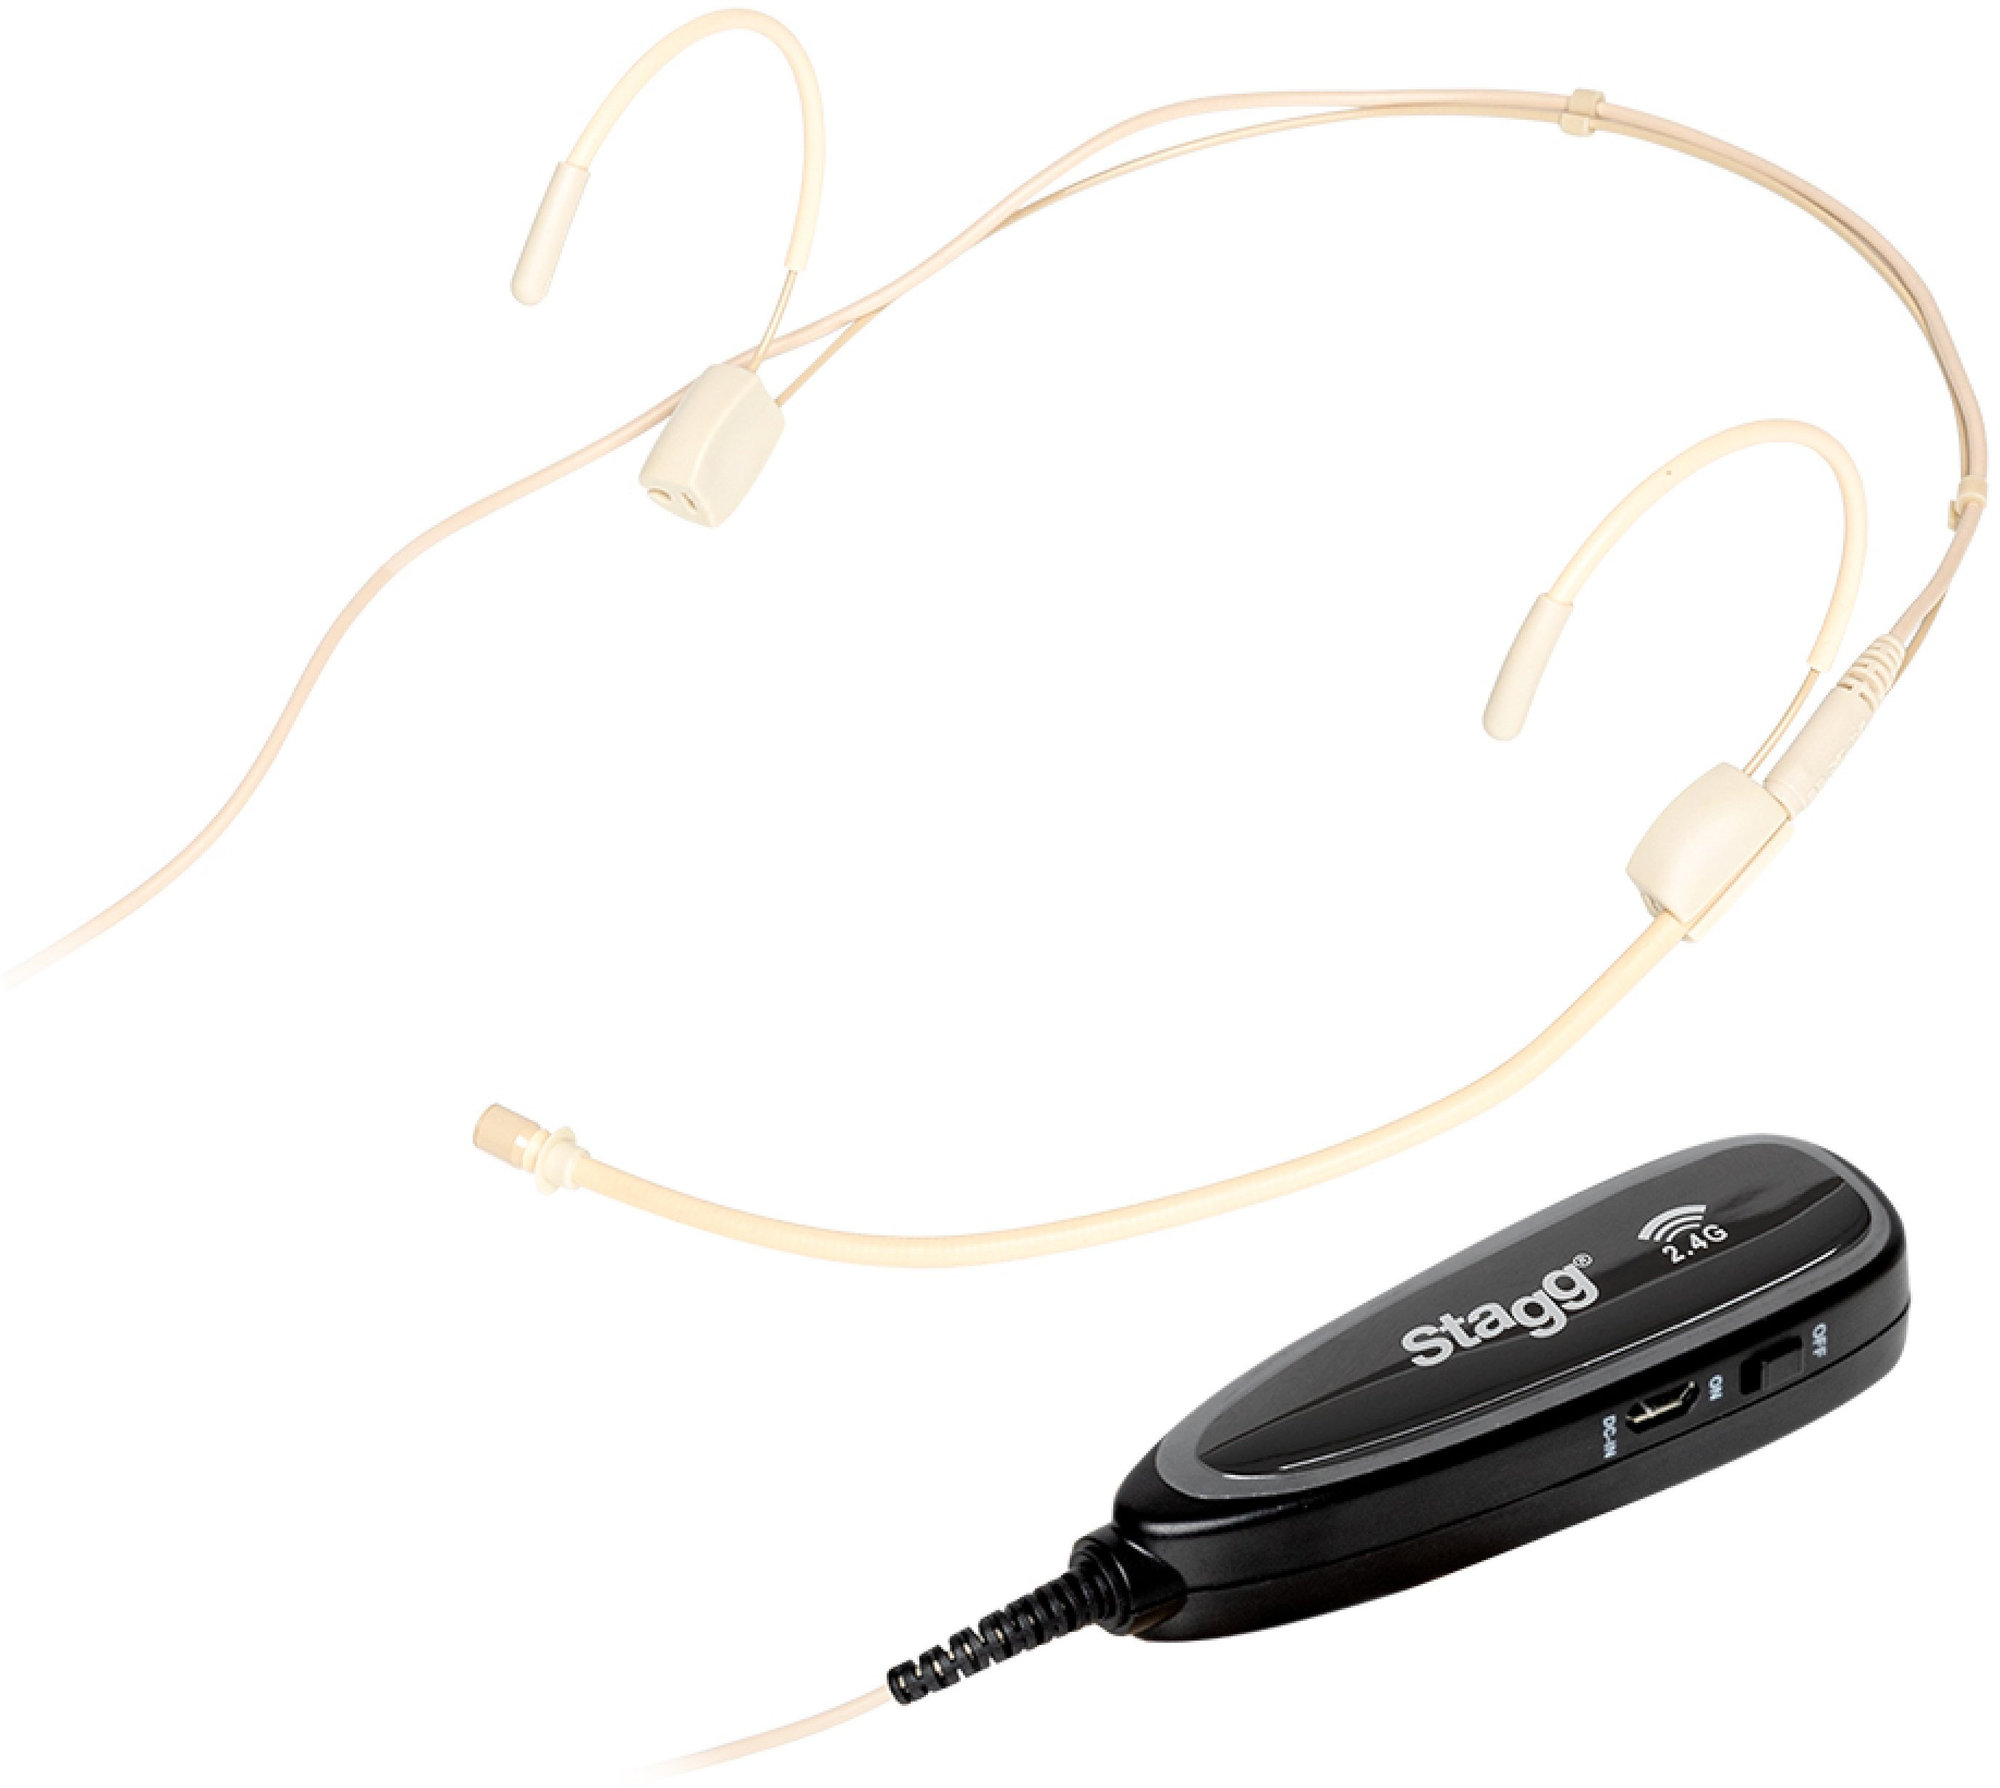 Stagg SUW 12H-BE UHF Beige Wireless Headset (2.4 GHz) Funkmikrofonset mit Headsetmikrofon